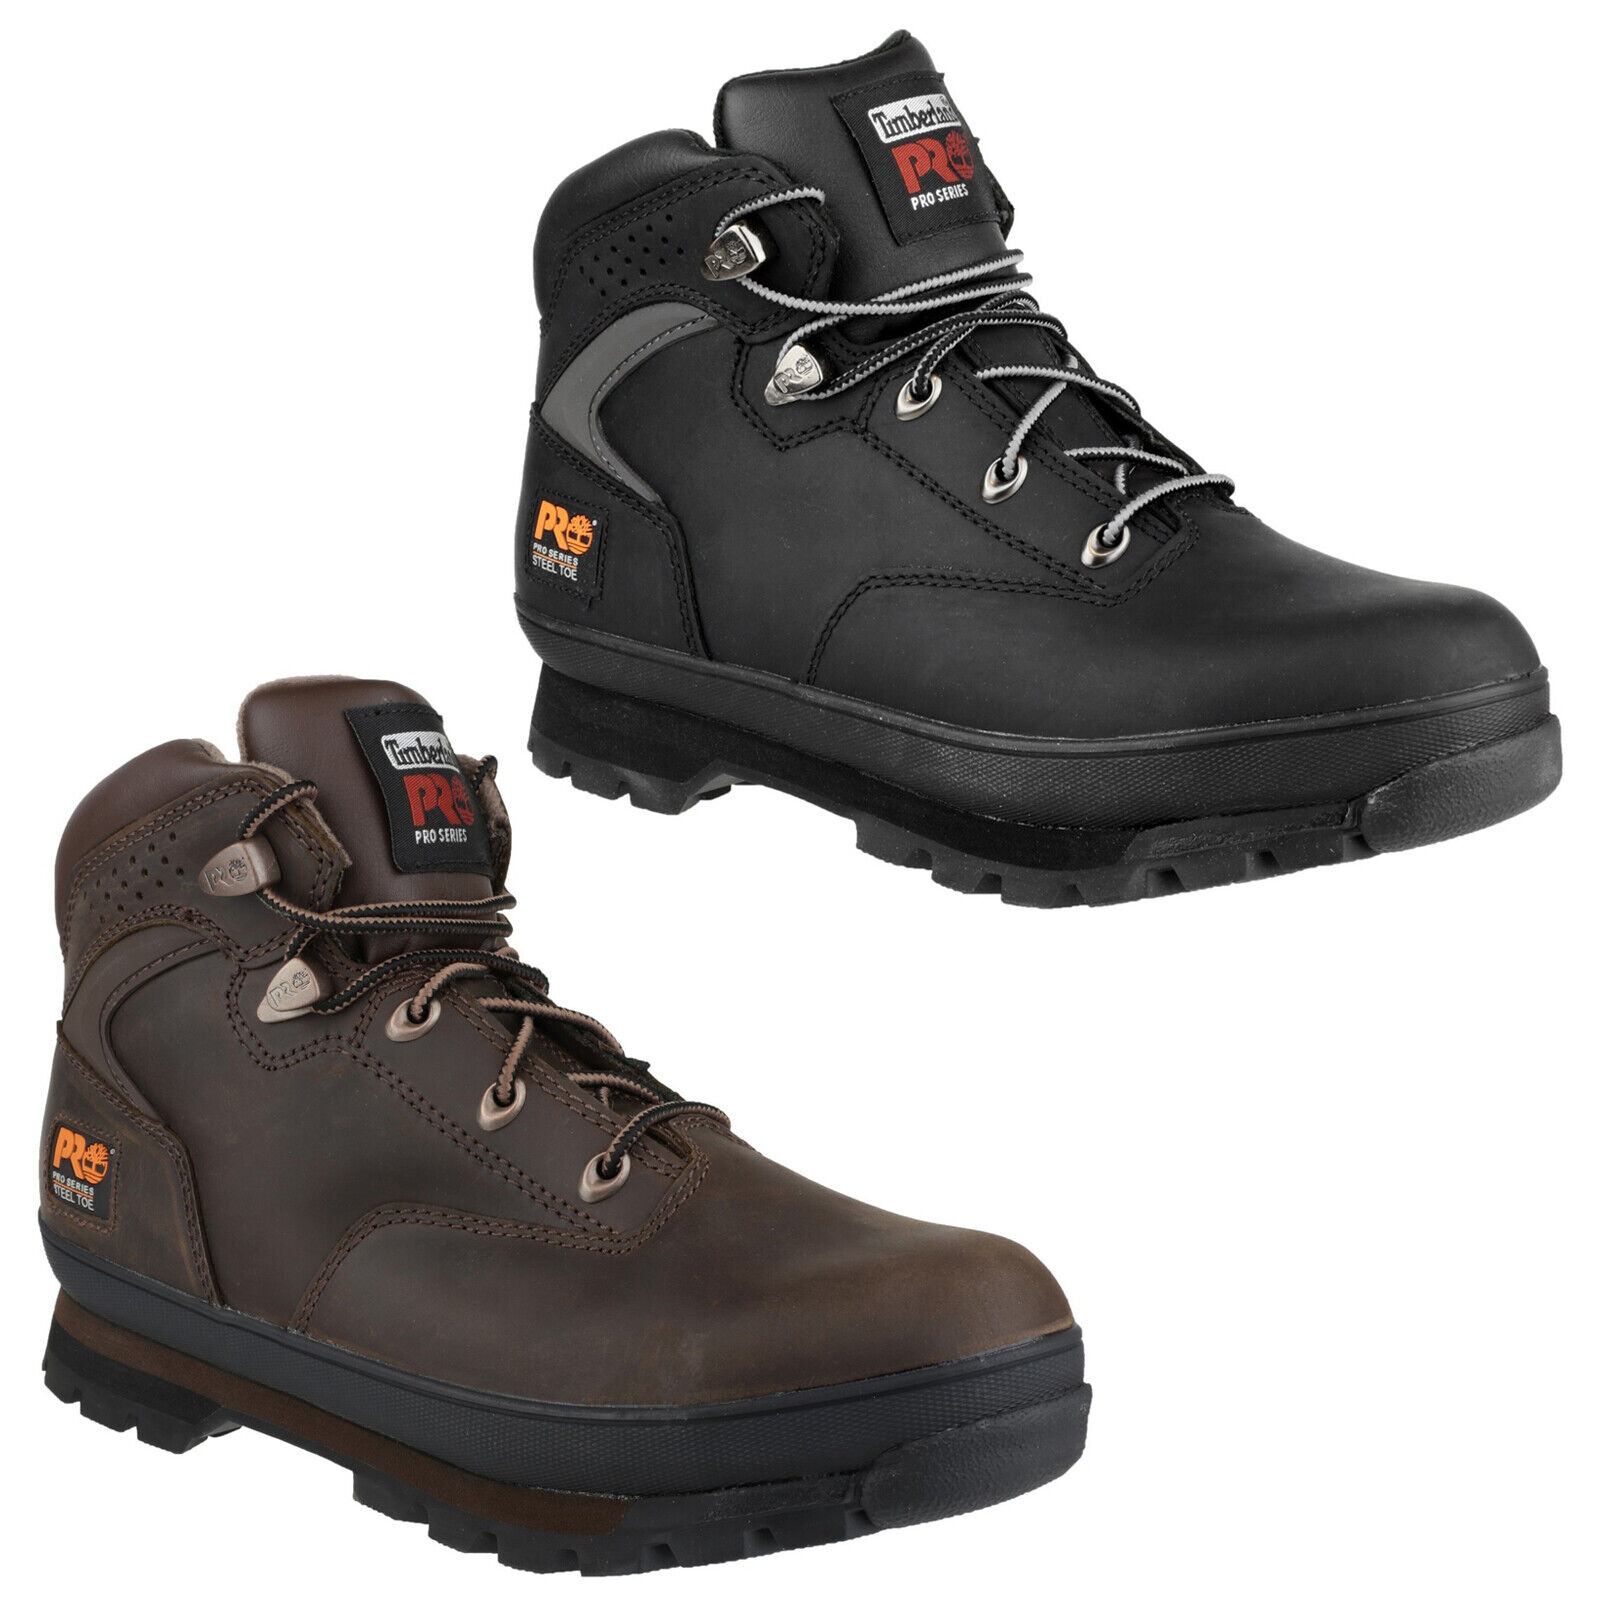 Timberland Pro Euro Hiker Safety Leather Boots Mens Steel Toe Cap Shoes UK6-12 Najniższa cena, ograniczona wyprzedaż